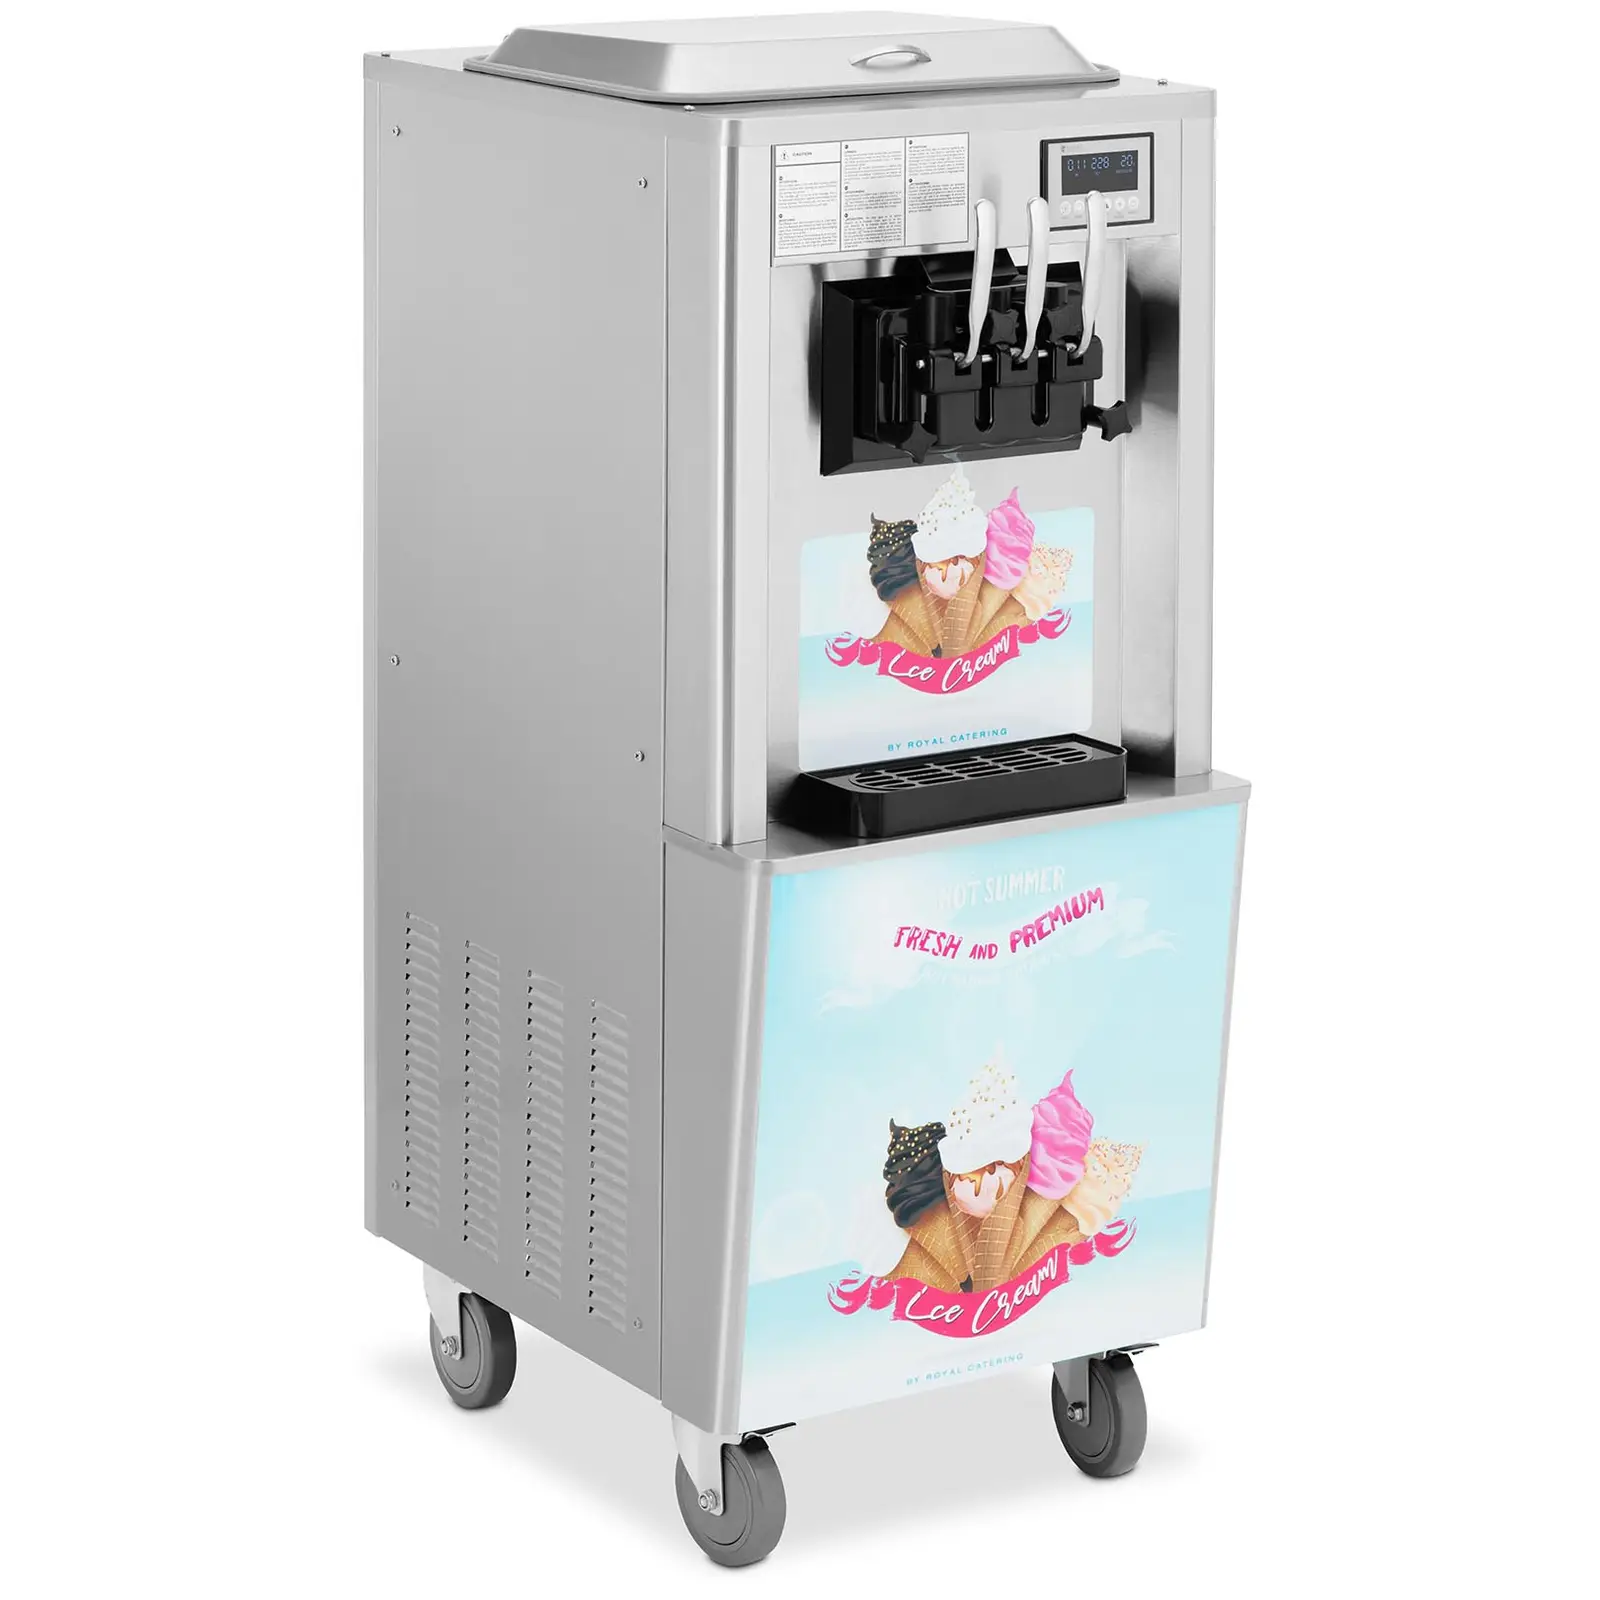 Machine à glace italienne - 2140 W - 33 l/h - 3 parfums - Royal Catering